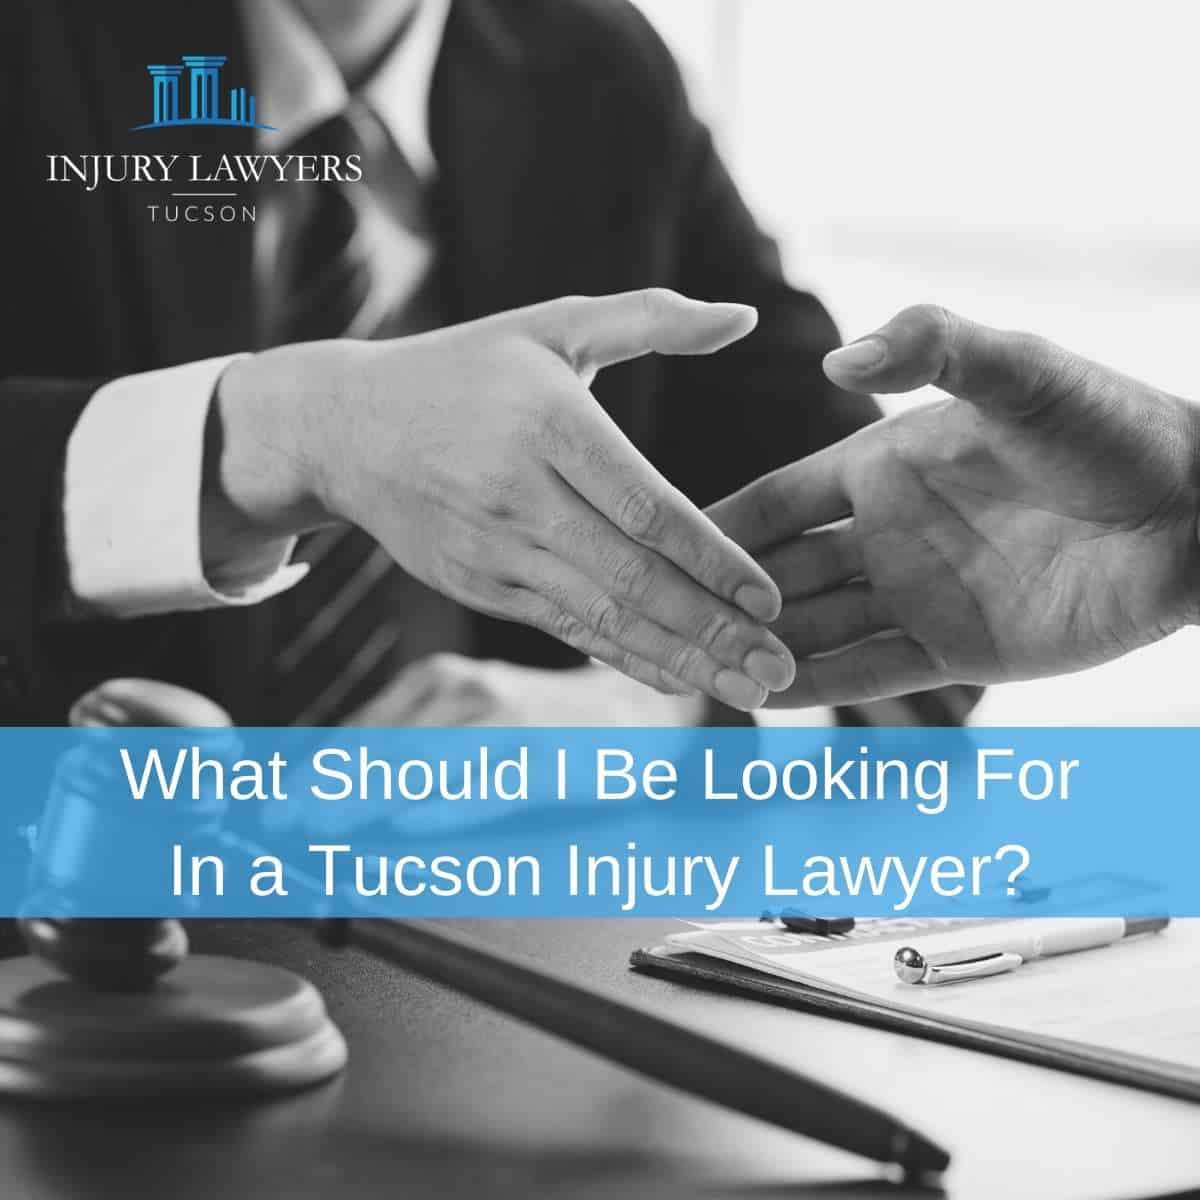 Tucson injury lawyer